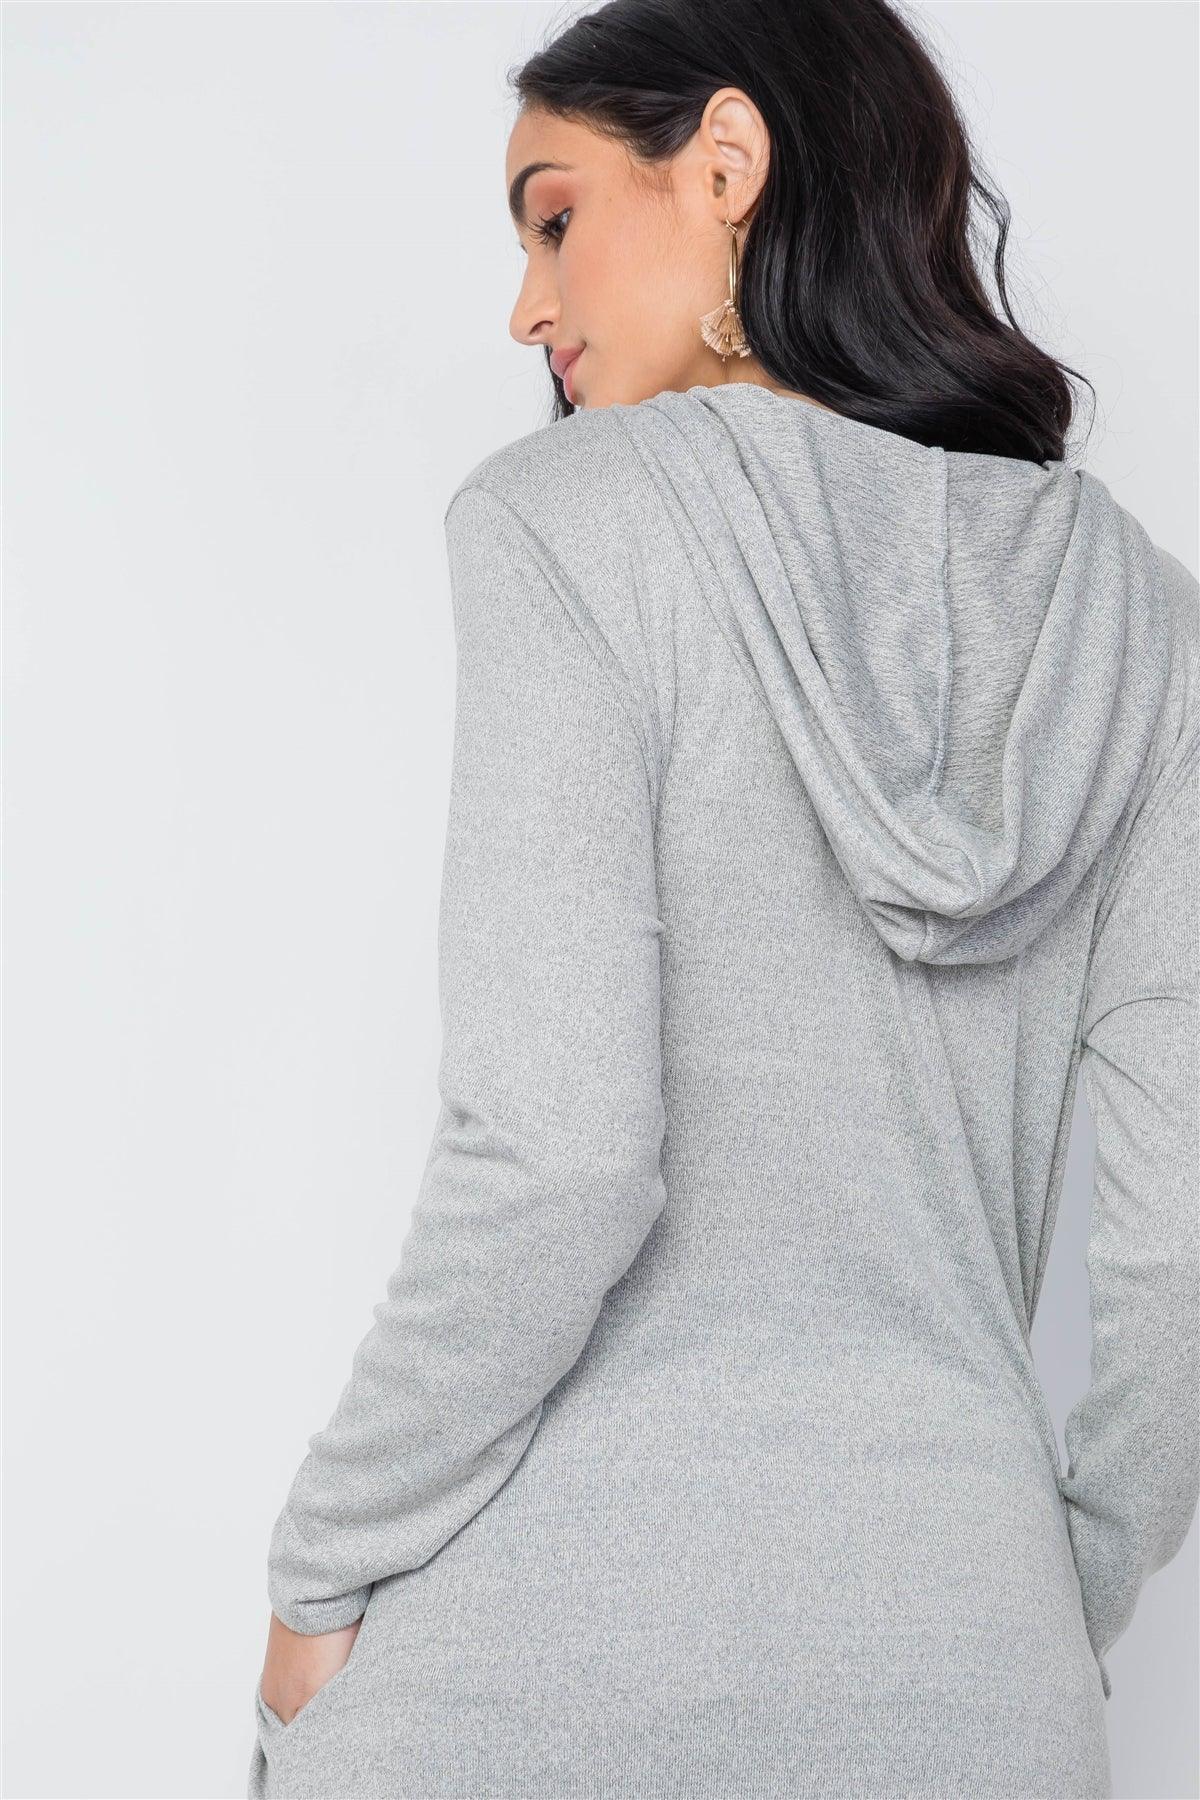 Grey Knit Long Sleeve V-Neck Hooded Midi Sweater Dress /2-1